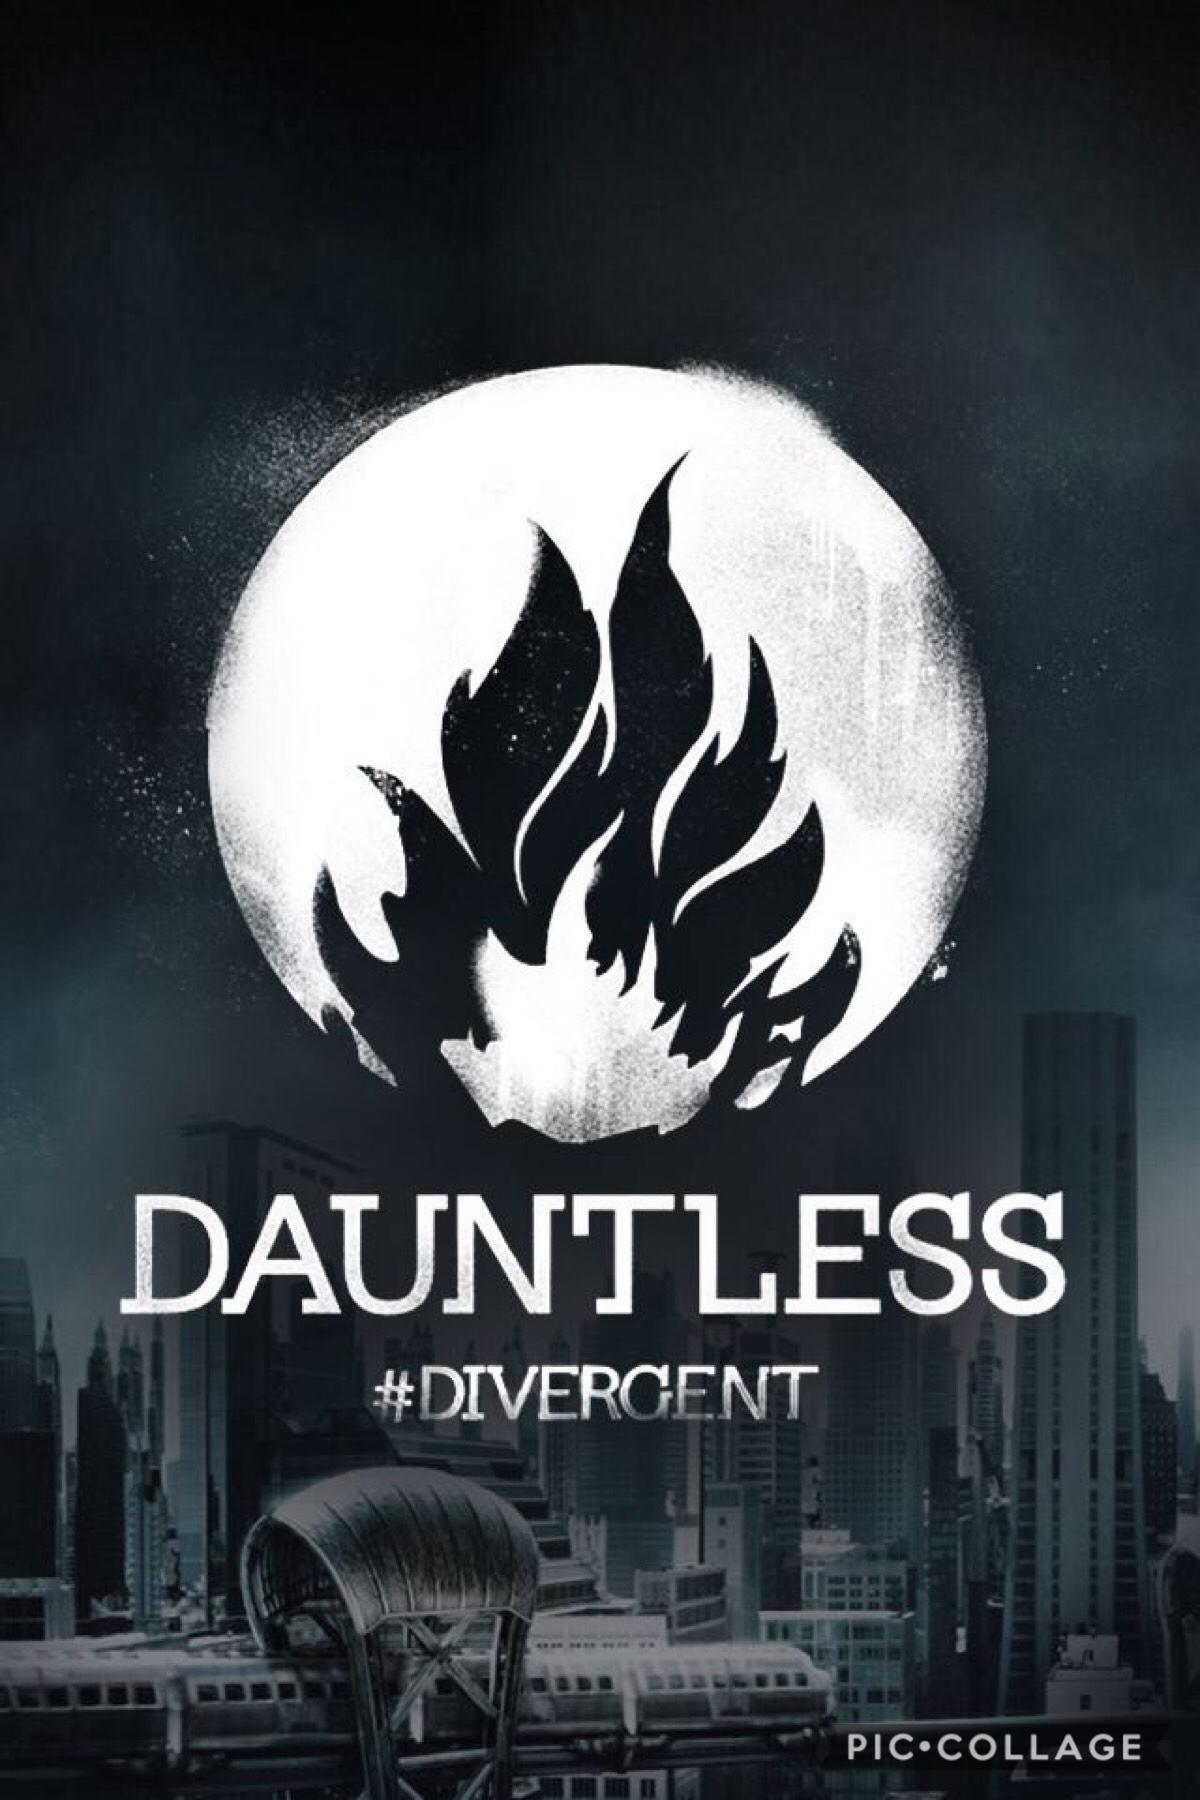 I am Dauntless 🔥